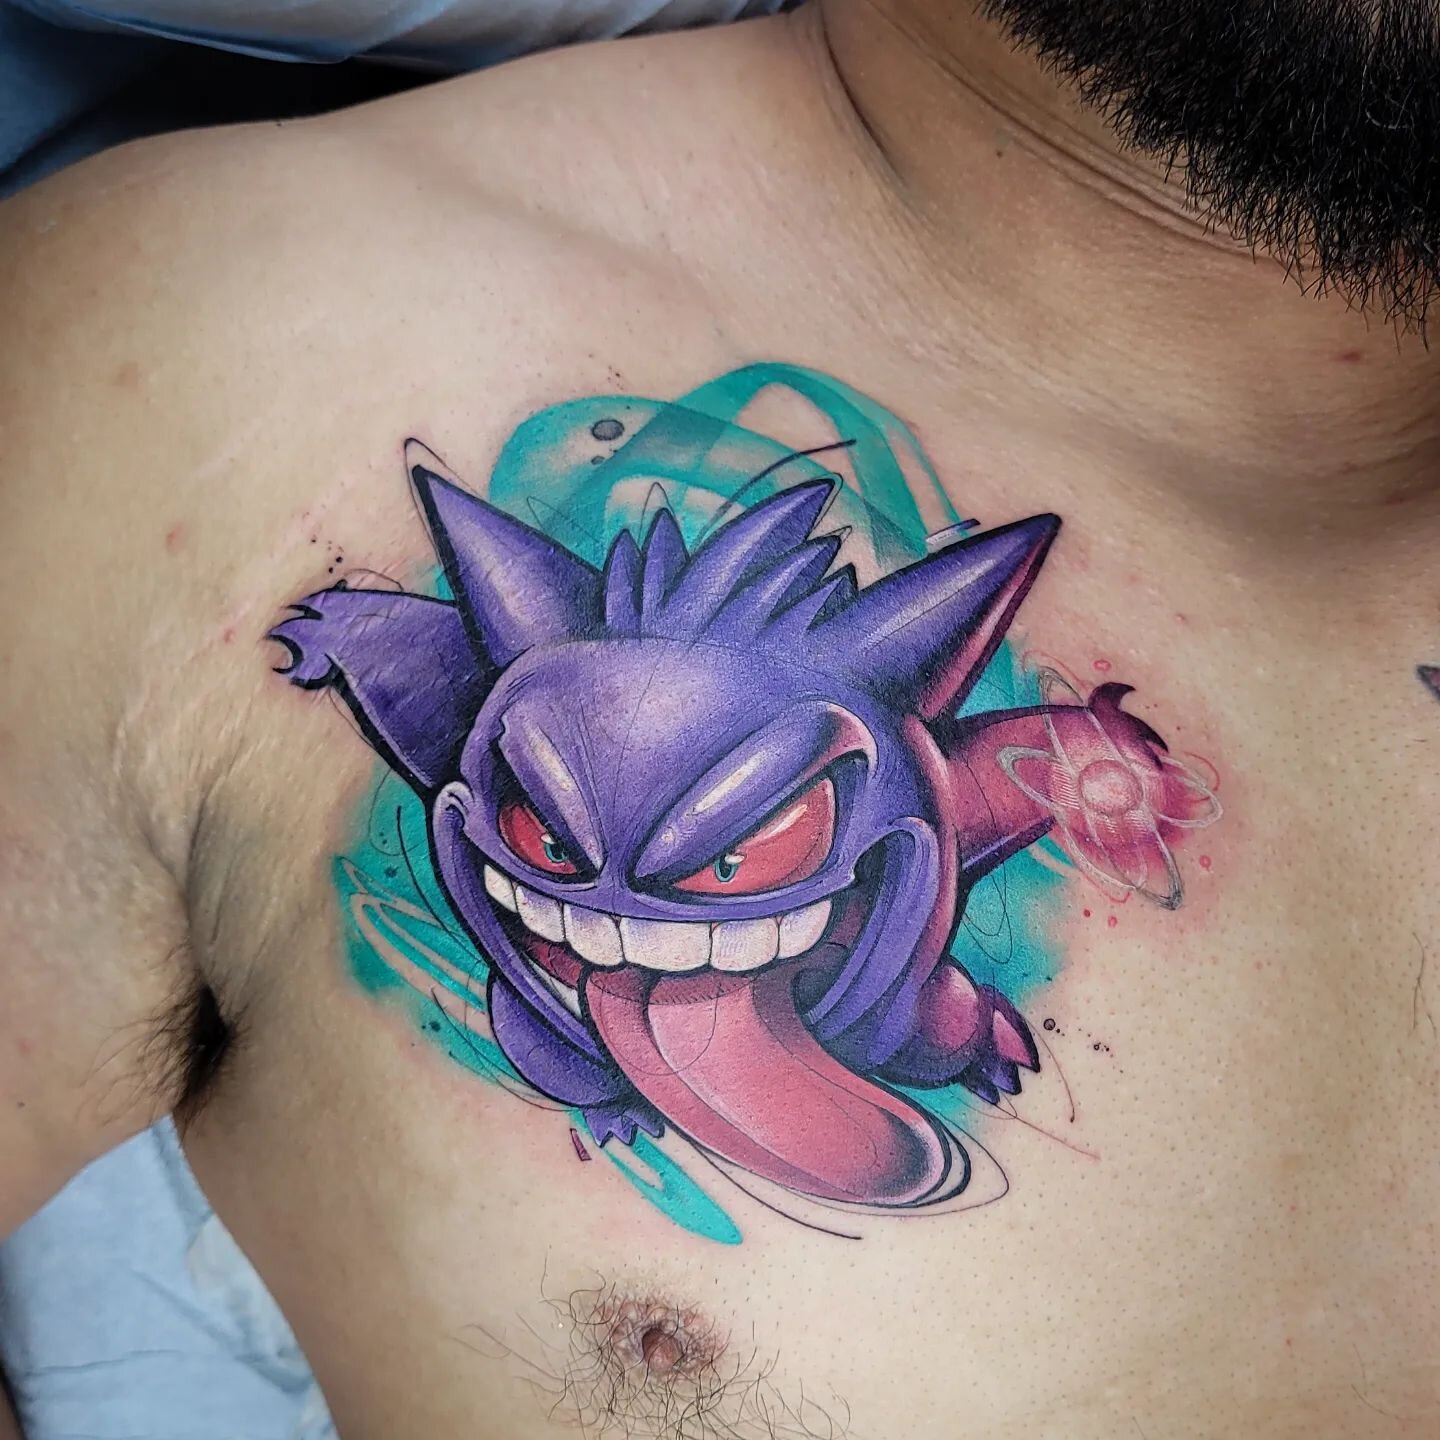 Gengar!!! Got to tattoo this super fun poketat recently.
.
.
#tattoo #tattoos #tatuajes #pokemon #pokemontattoo #love #instagood #animemasterink #anime #videogametattoo